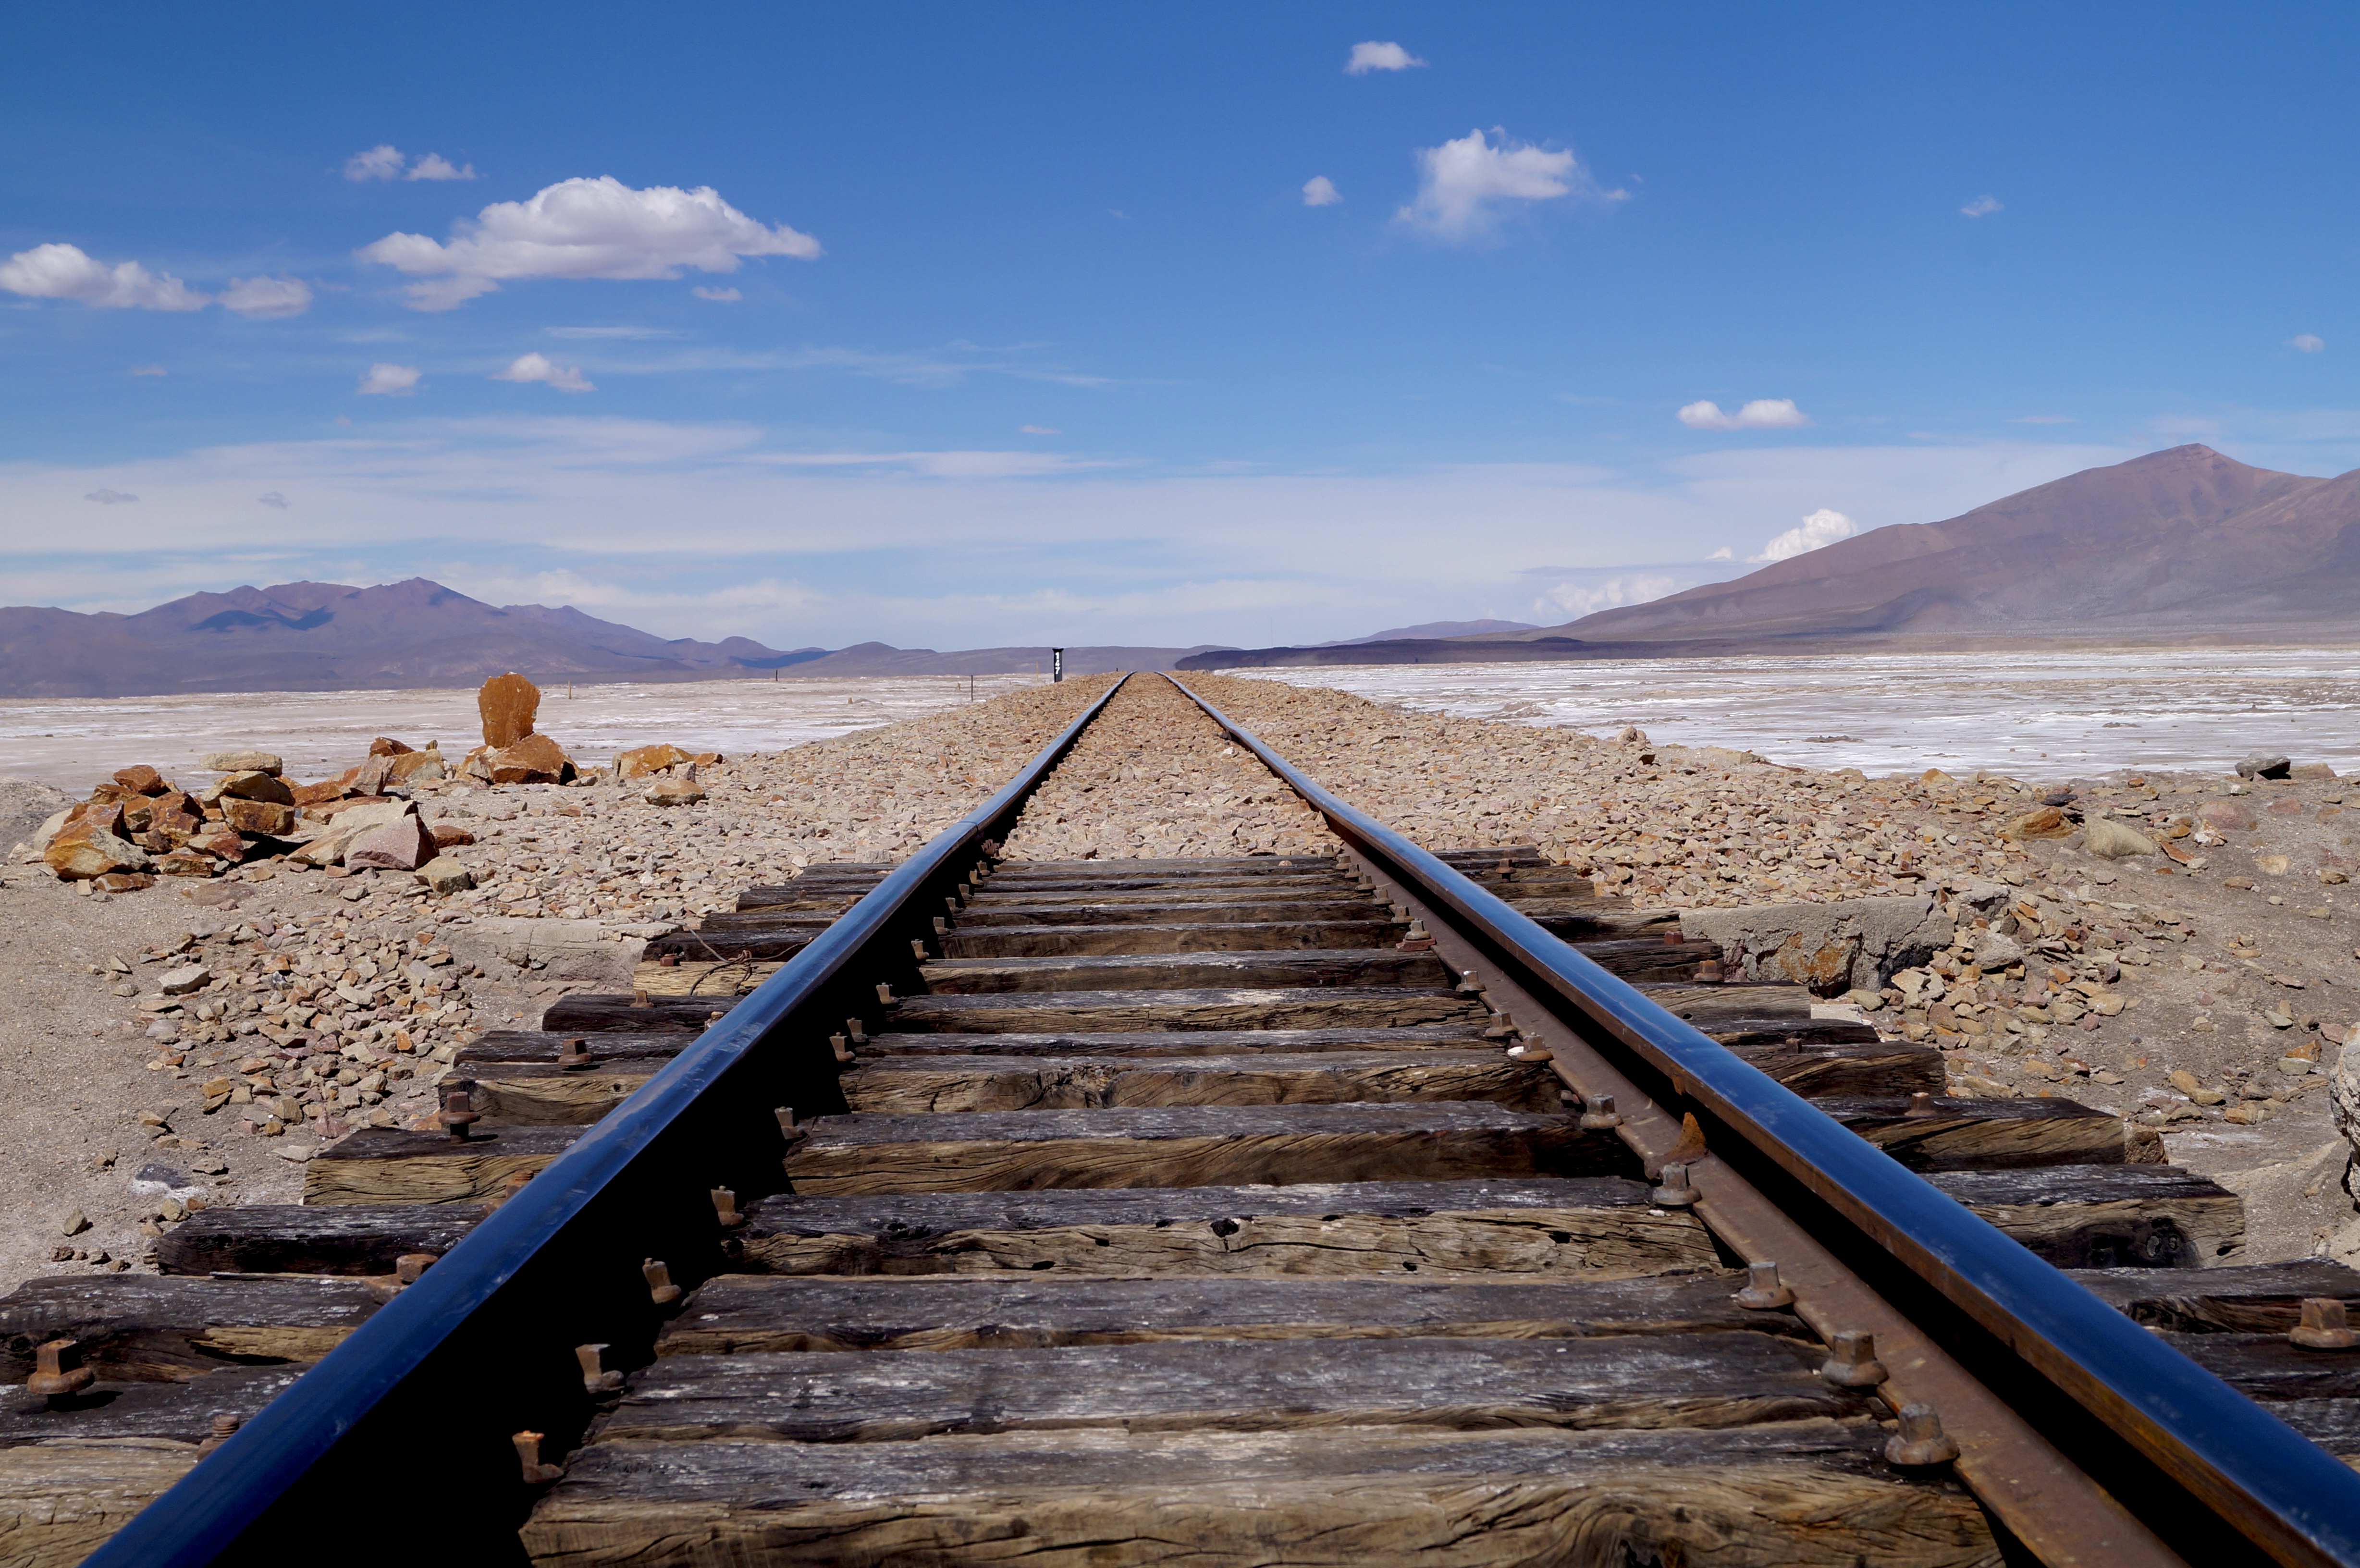 Train tracks leading into horizon